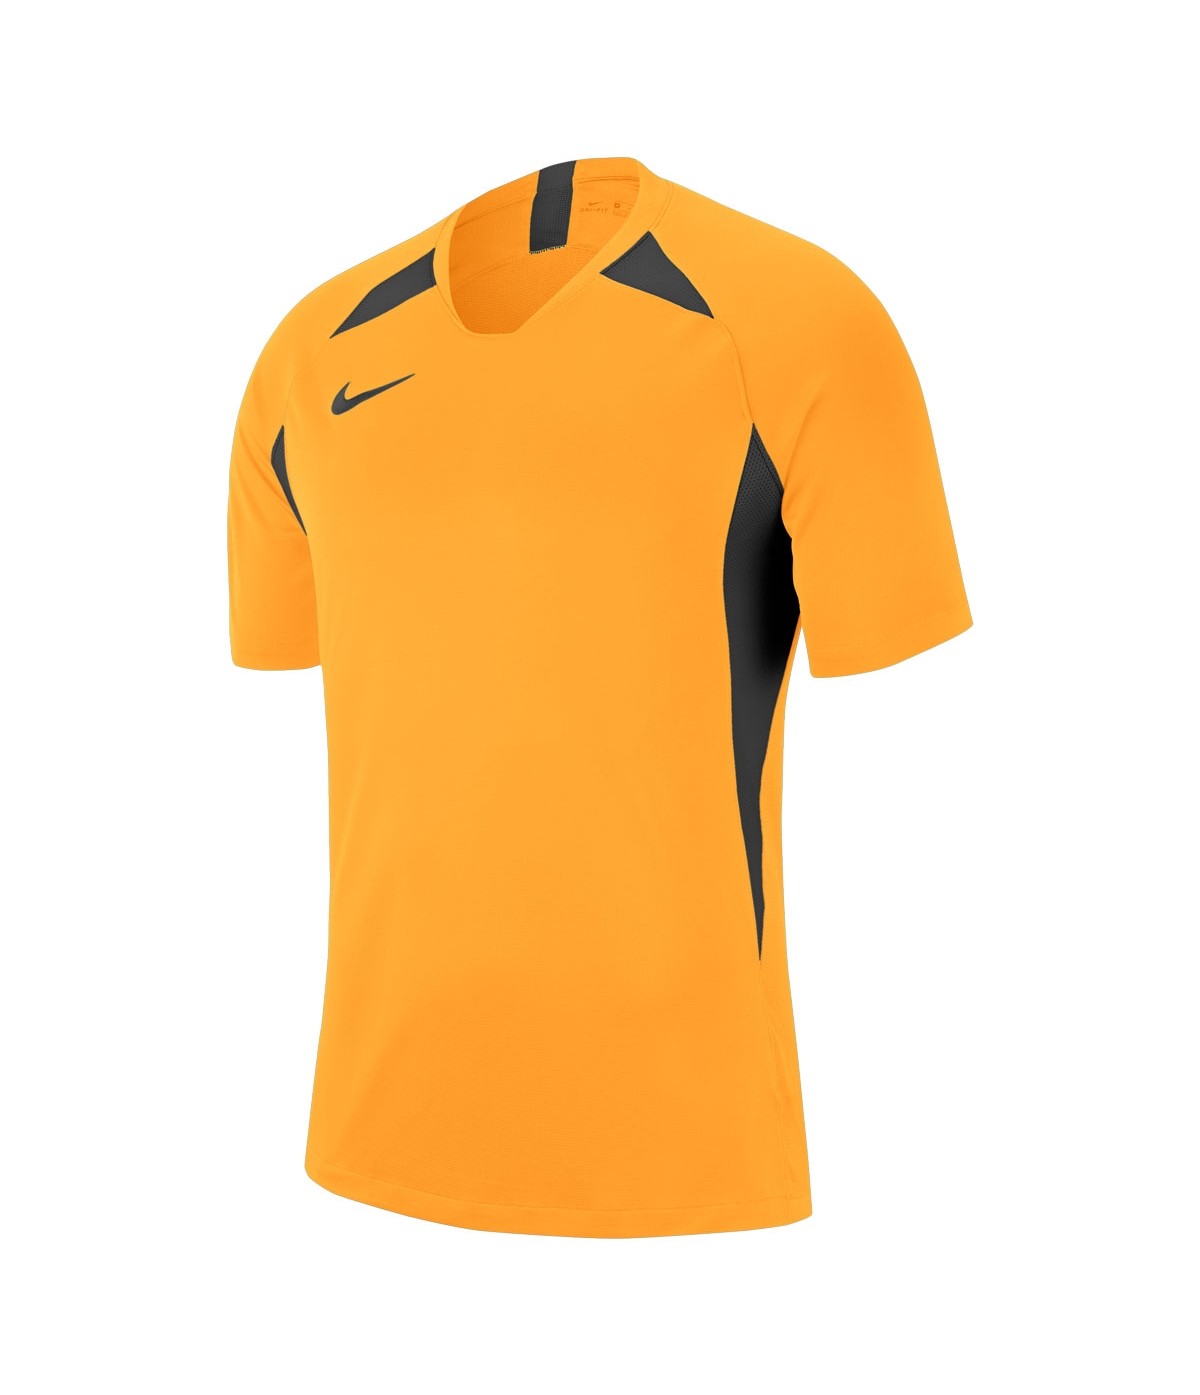 Nike Football Shirts – Kits 4 All